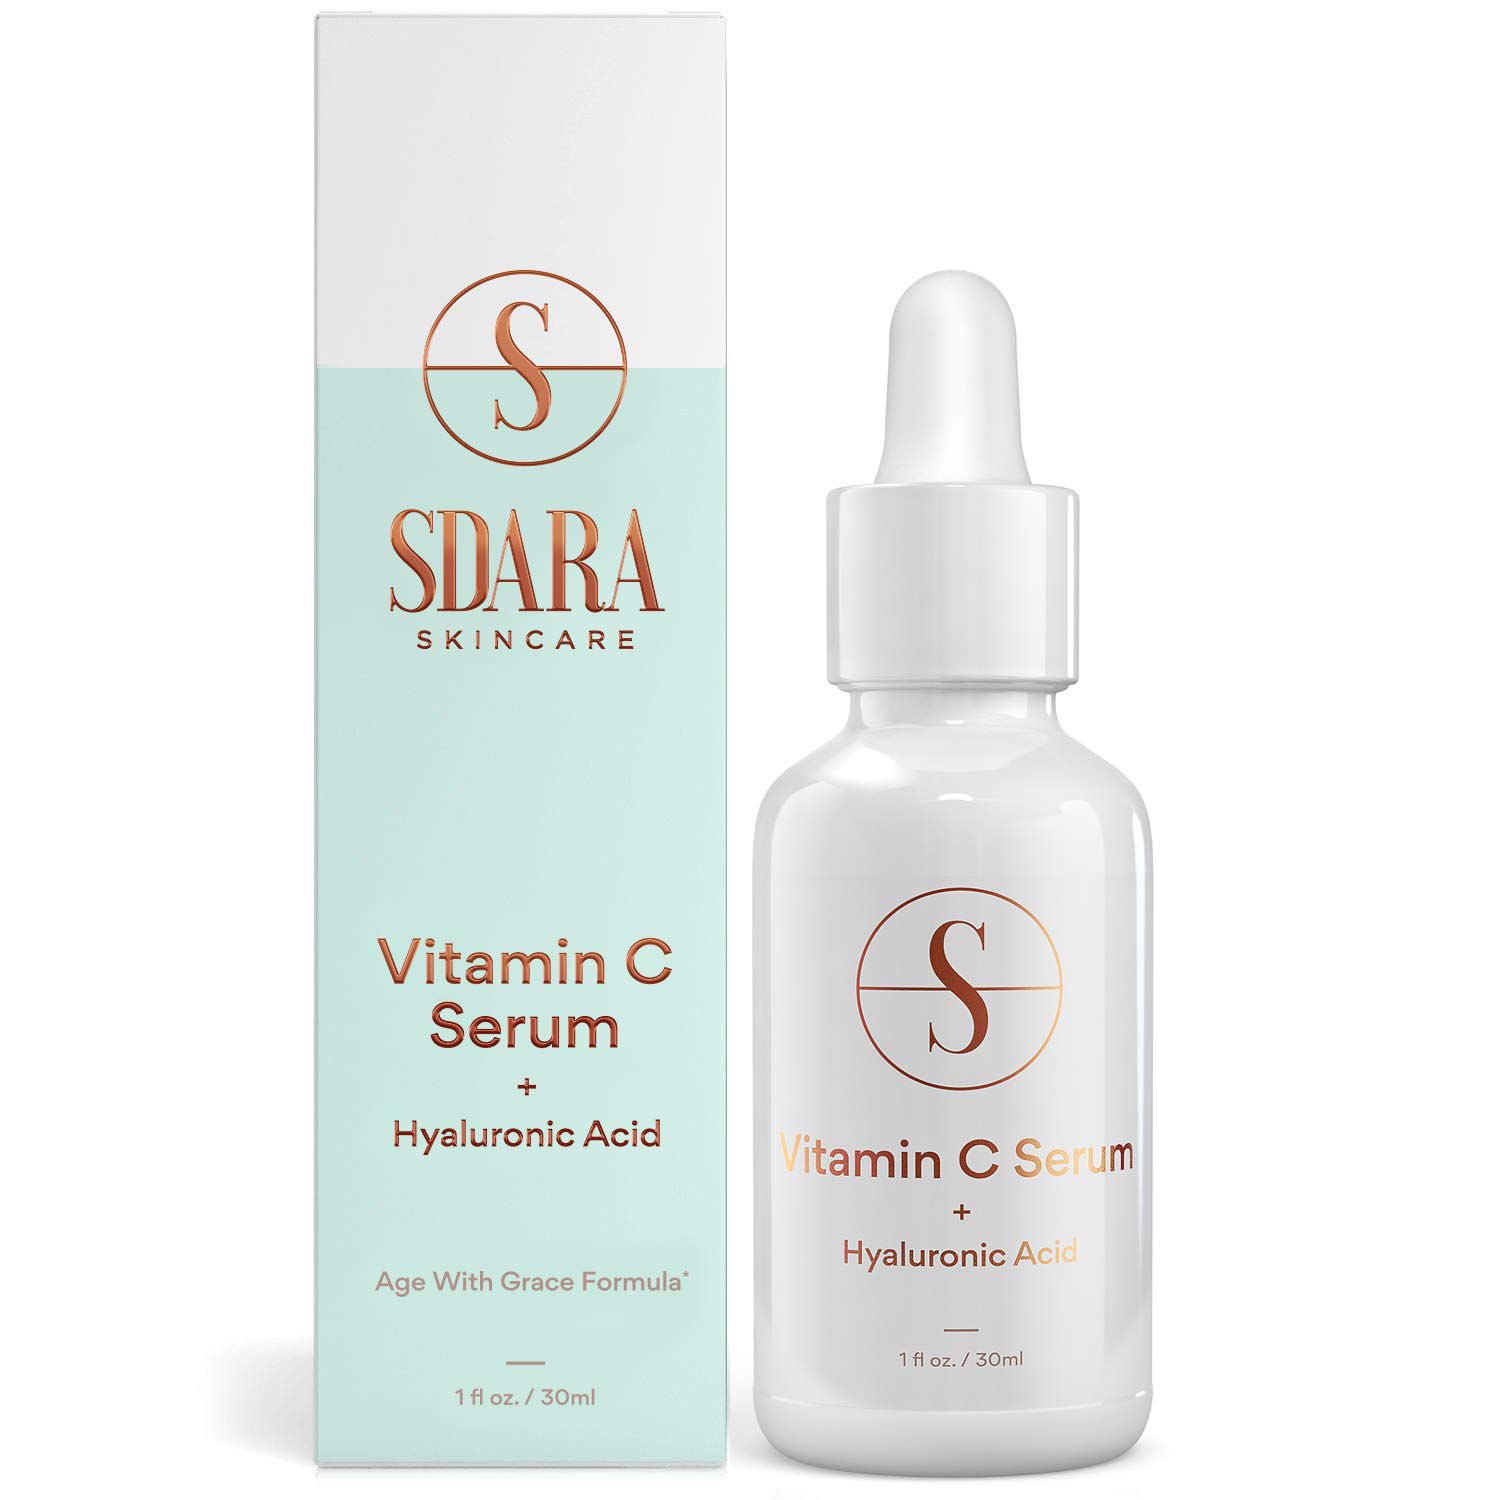 Sdara Skincare Վիտամին C շիճուկ դեմքի համար՝ հիալուրոնաթթվով 5%